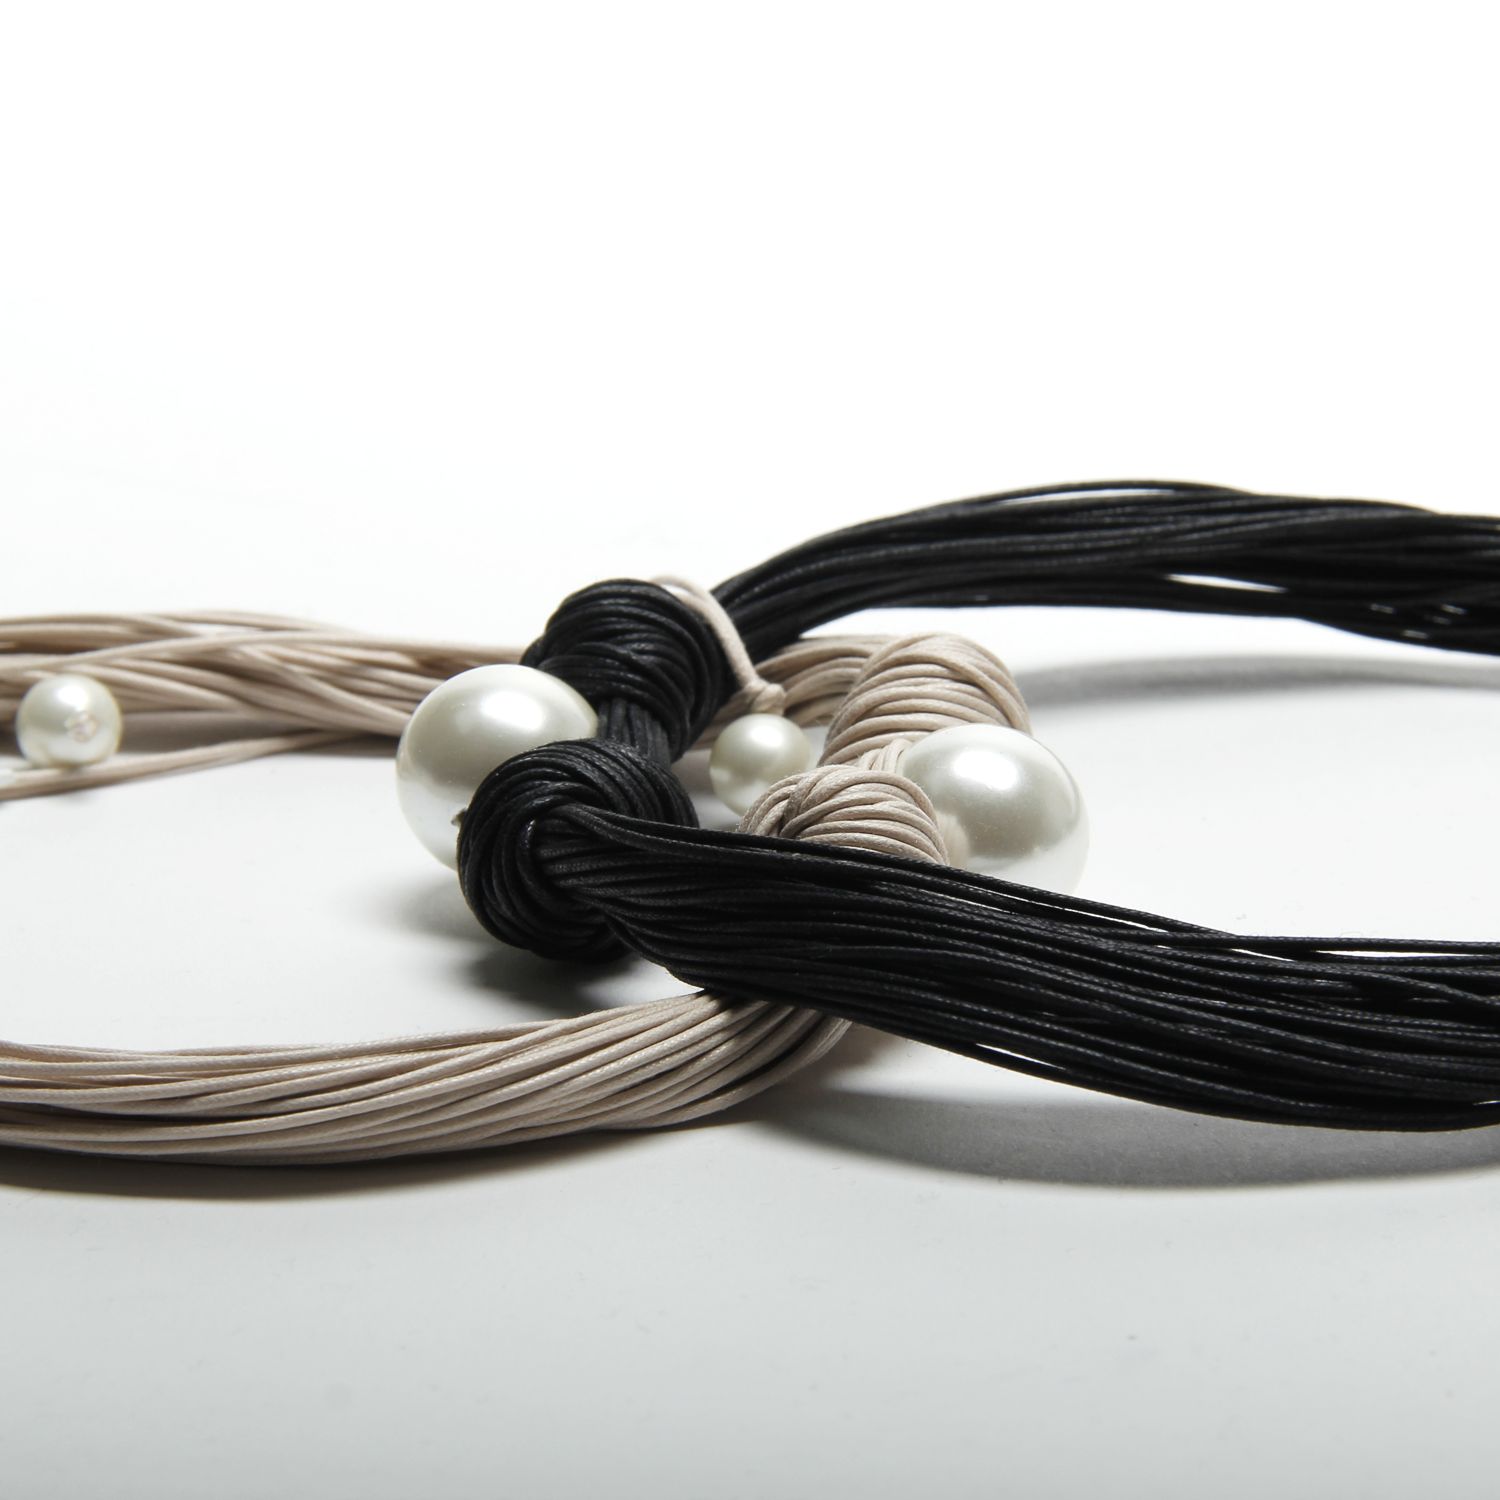 Oz & Ella Design: Solo Pearl Necklace – Black Product Image 2 of 2